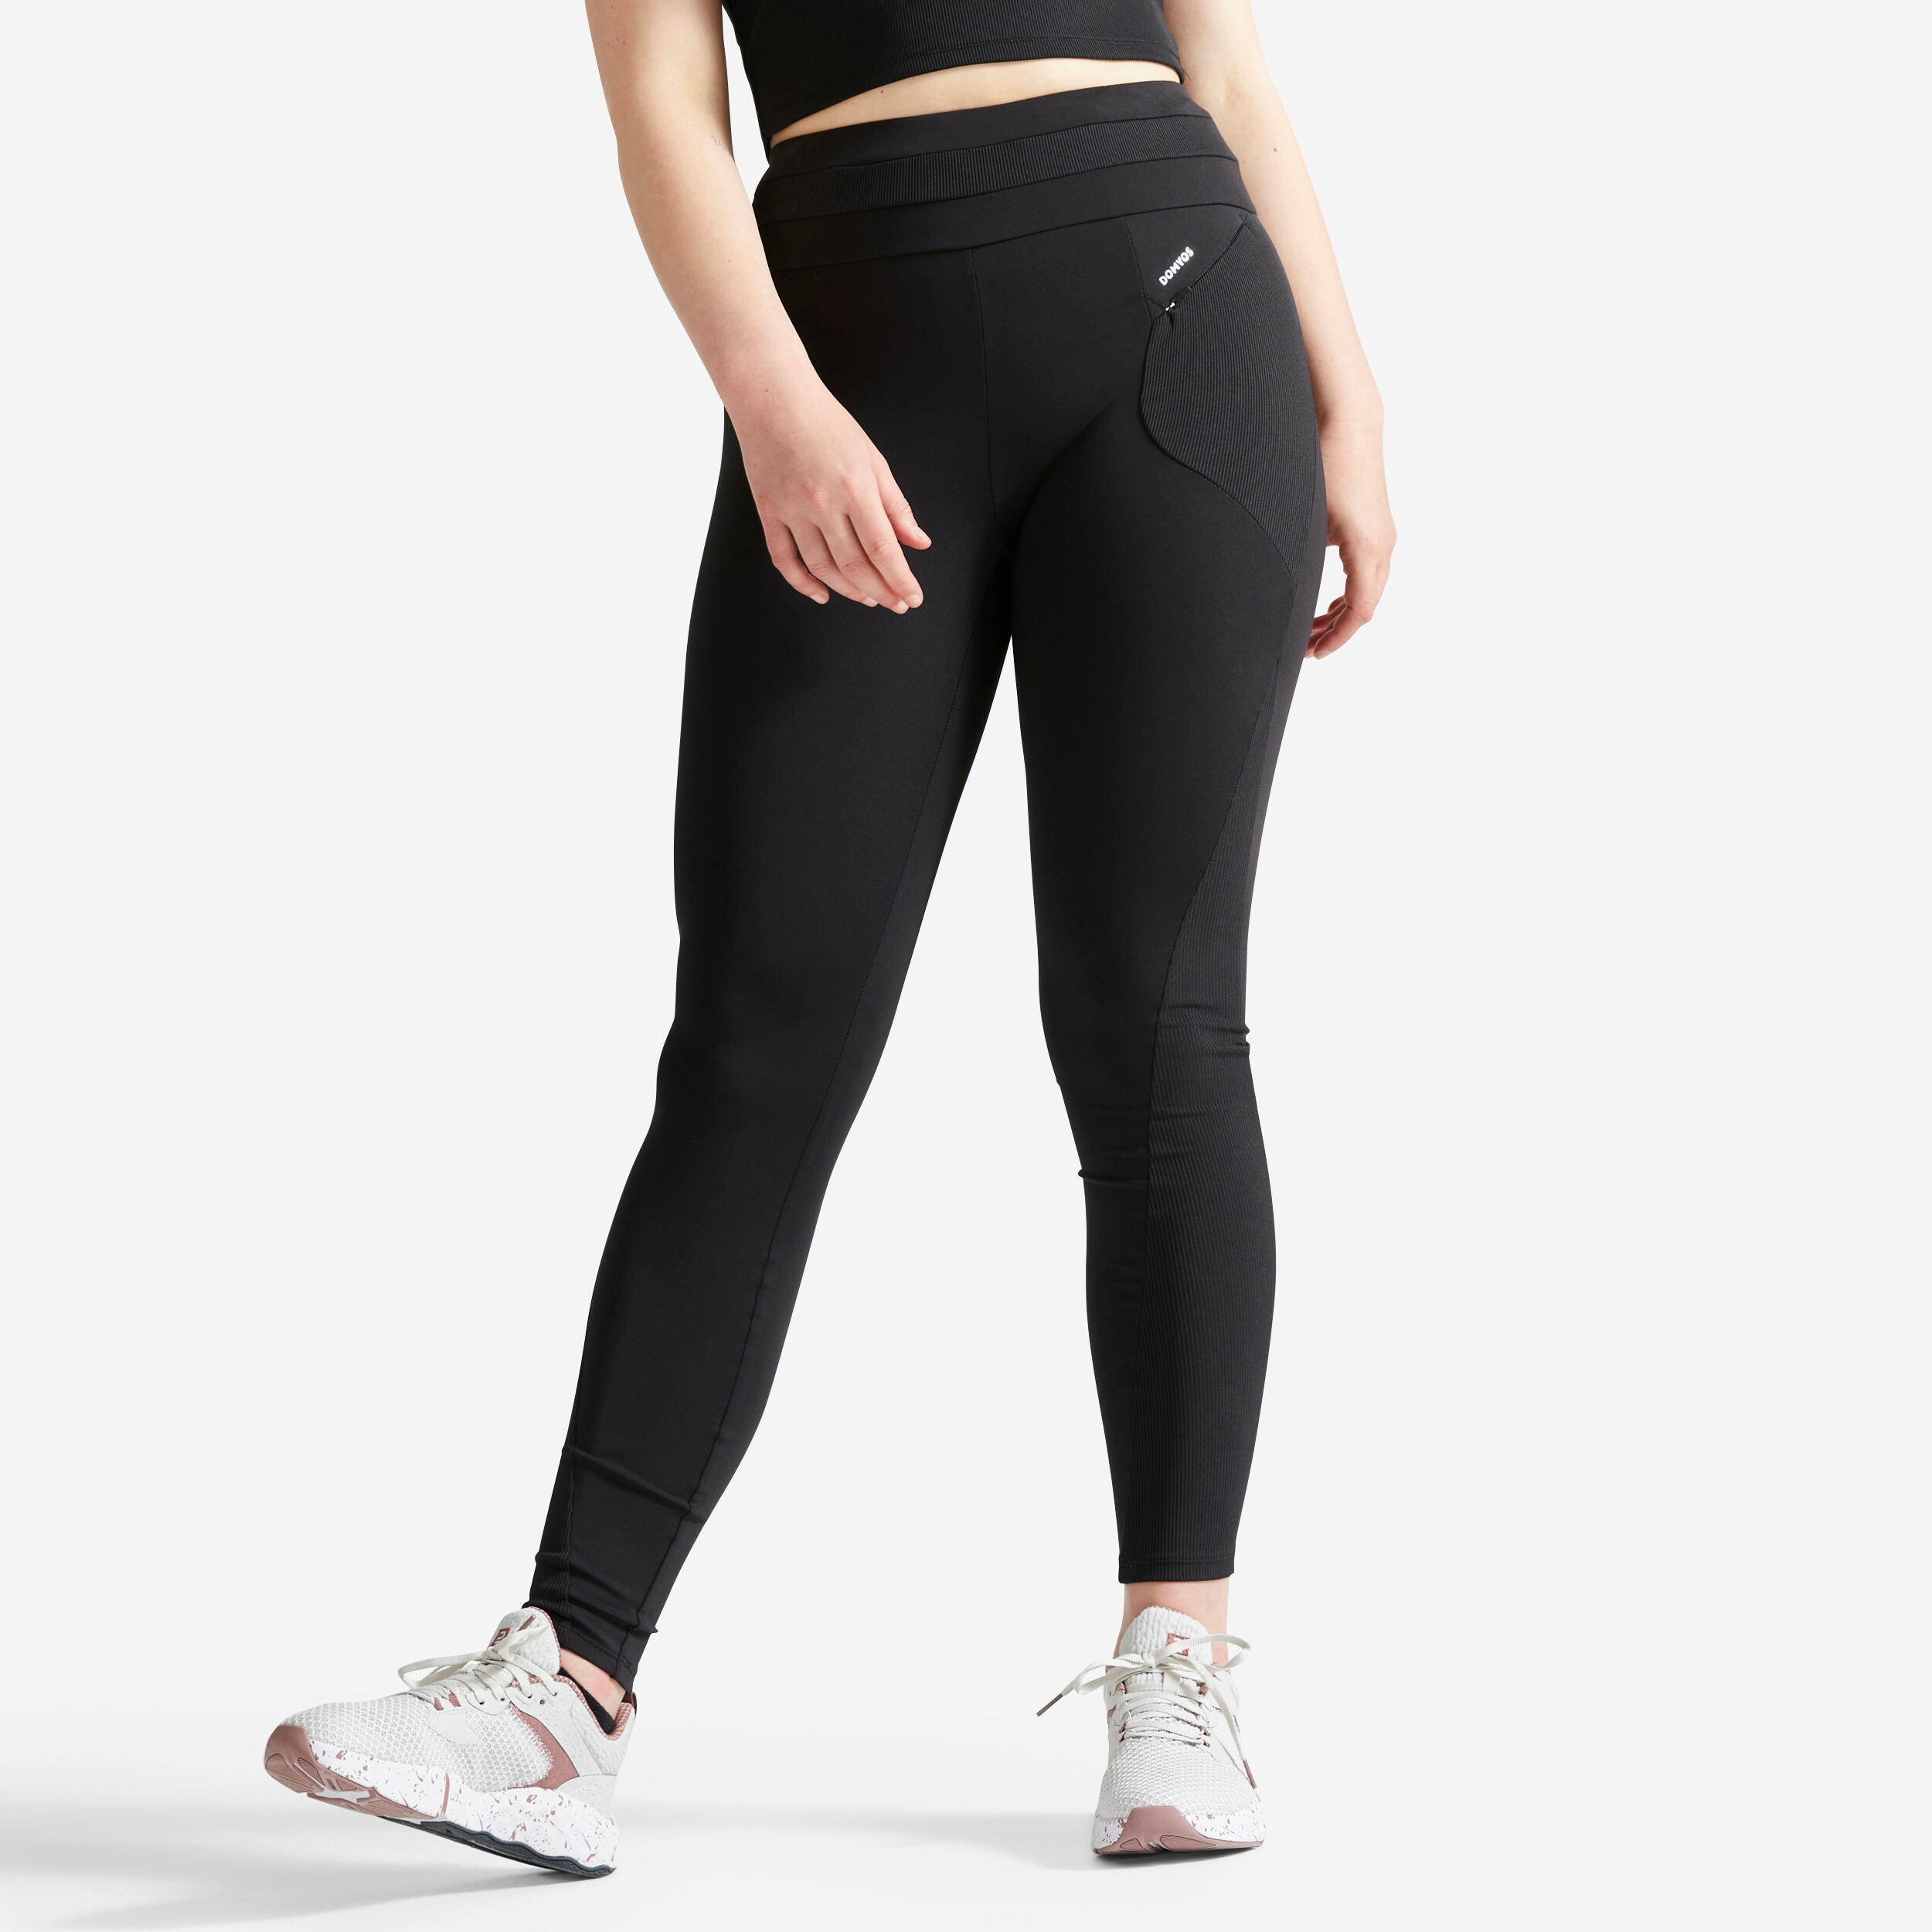 Buy WMX tretchable, Men & Women Tight Skin-Black Gym/Yoga/Tops Full Sleeve  & Gym Legging Tights Innerwear:- (Combo) (Small, Black) at Amazon.in